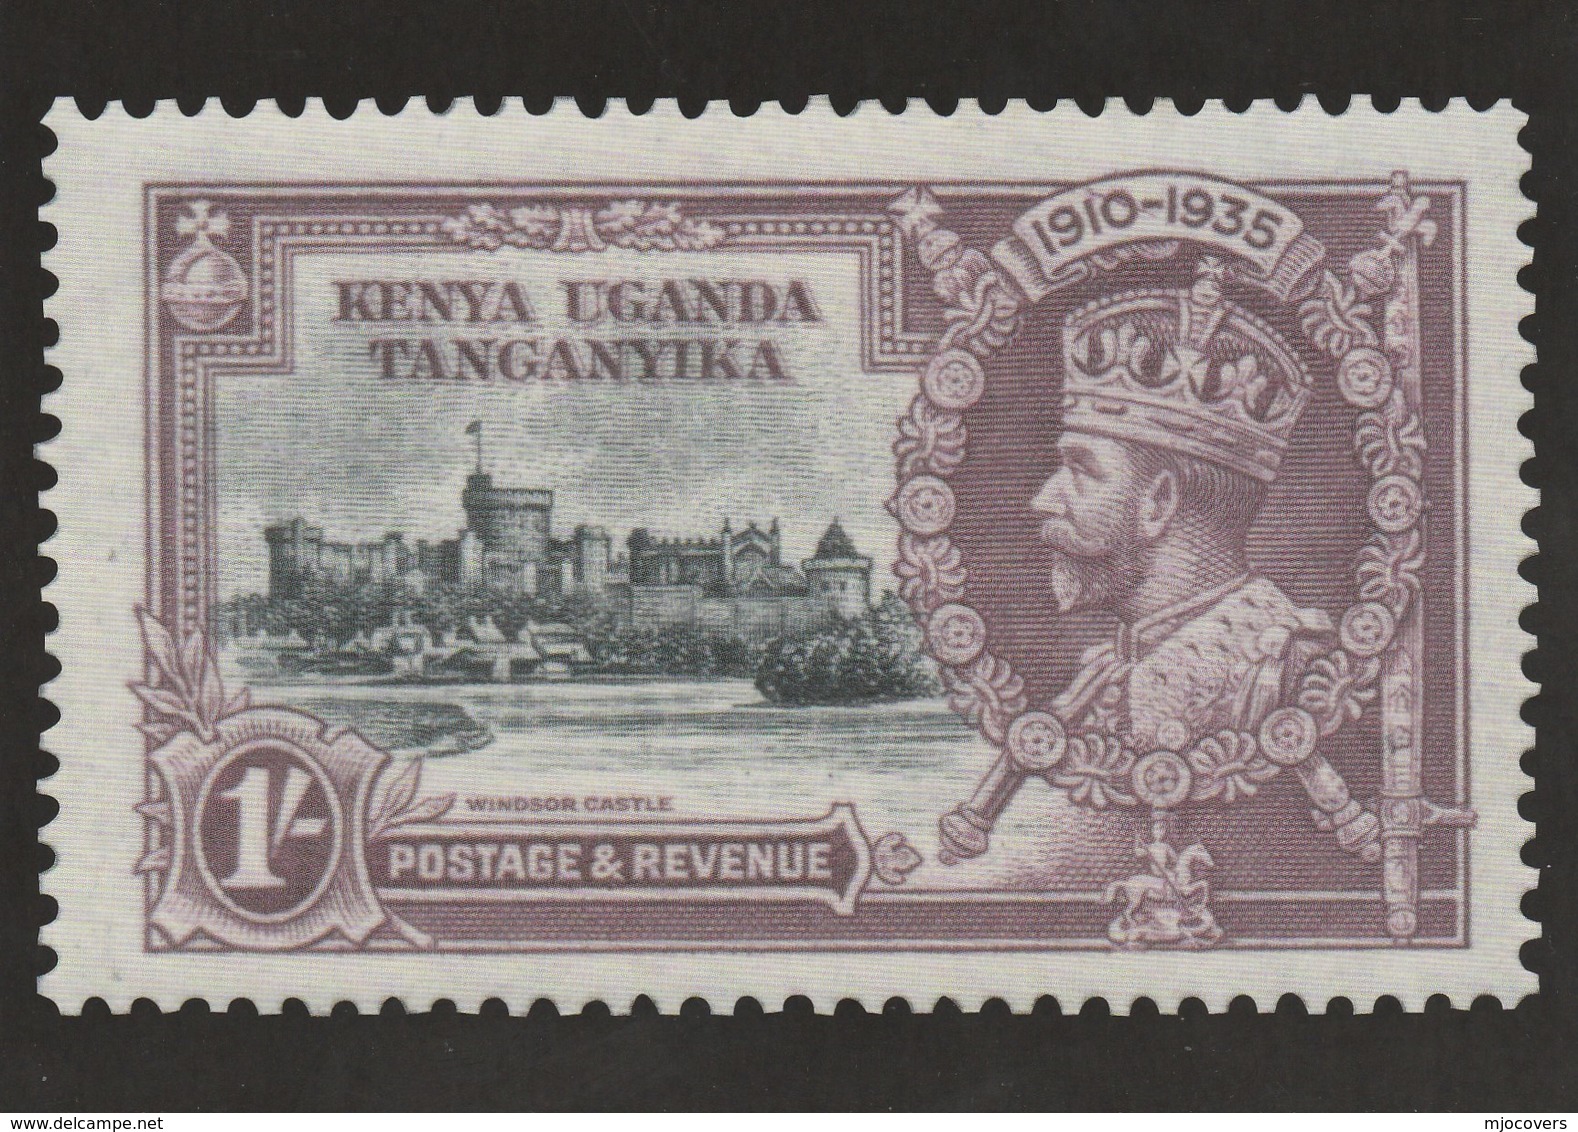 Postcard Depicting 1/- Kenya Uganda Tanganyika Stamp Card By Philangles Gb - Stamps (pictures)